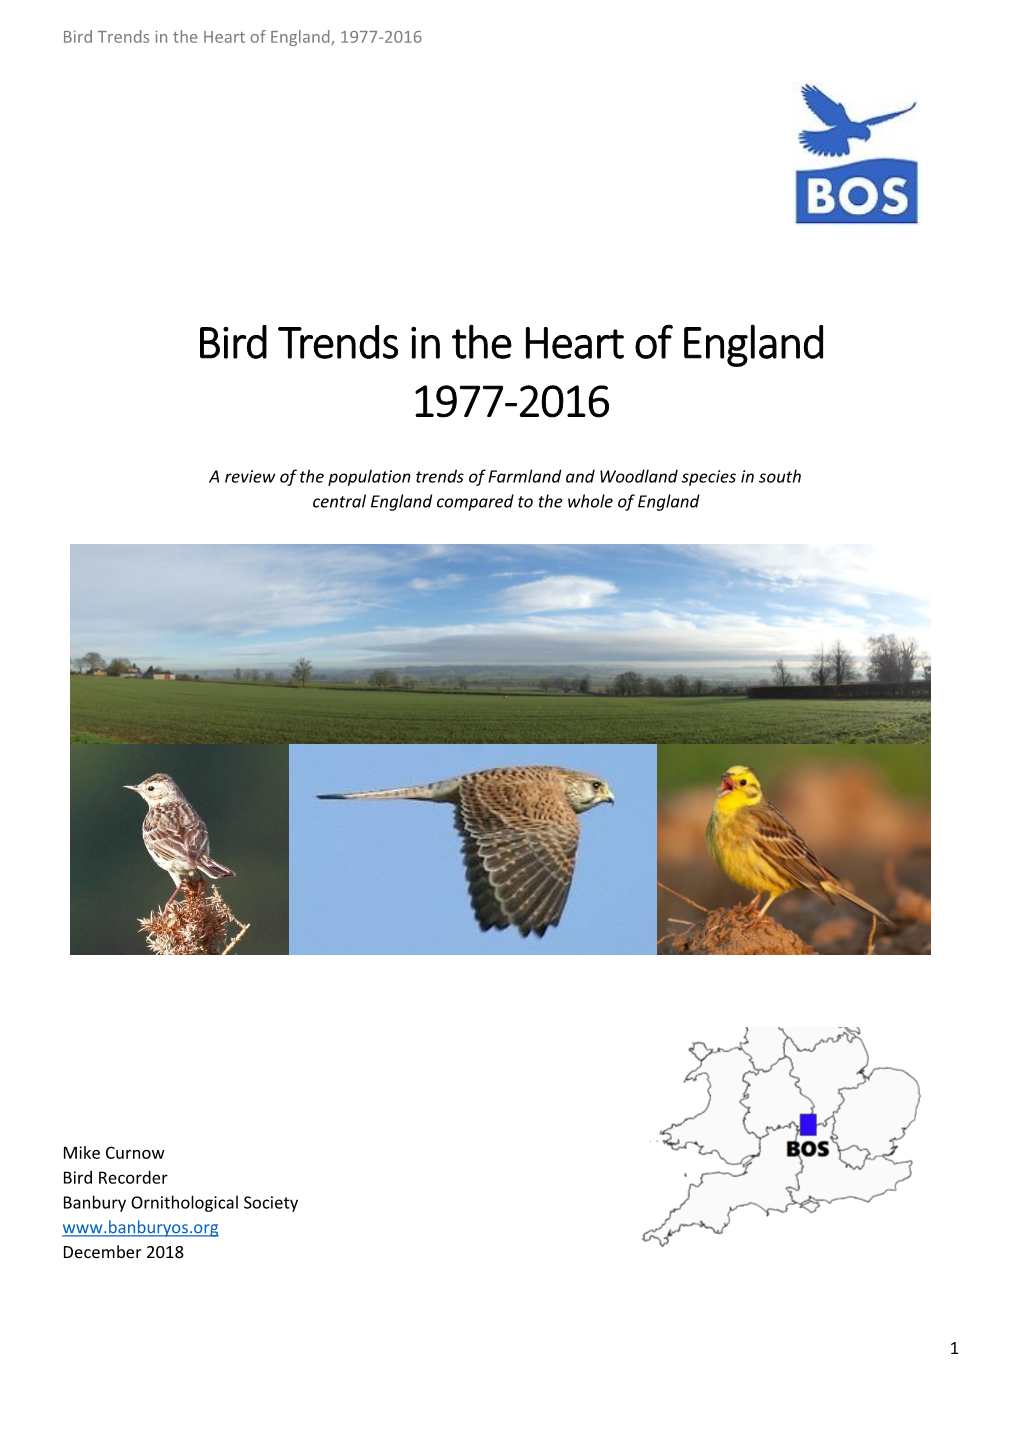 Bird Trends in the Heart of England 1977-2016